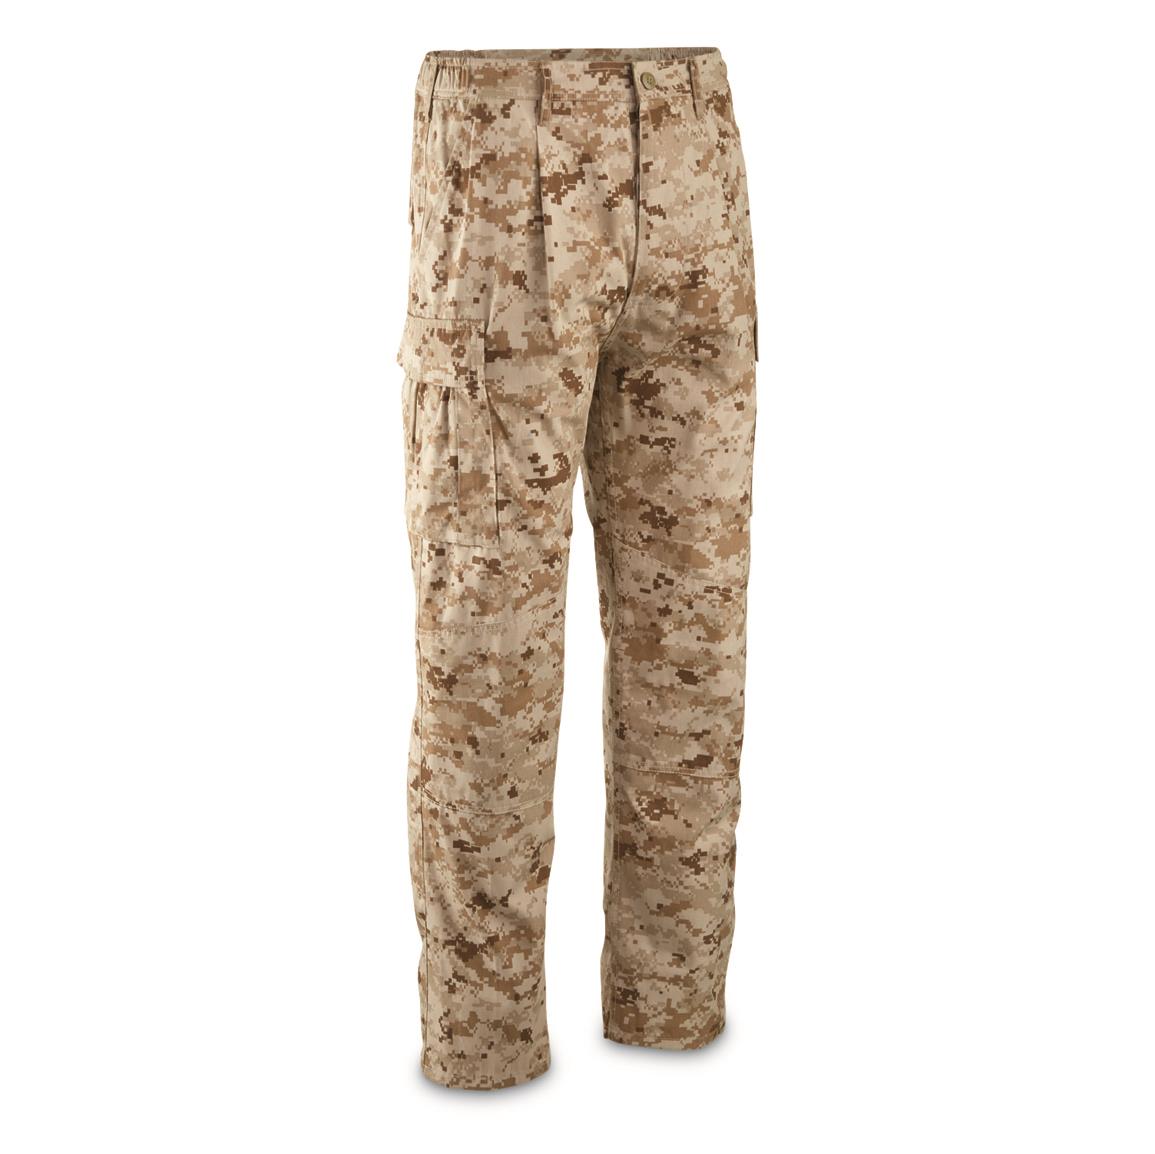 USMC Military Surplus Cotton Sateen BDU Pants, New, Desert Digital